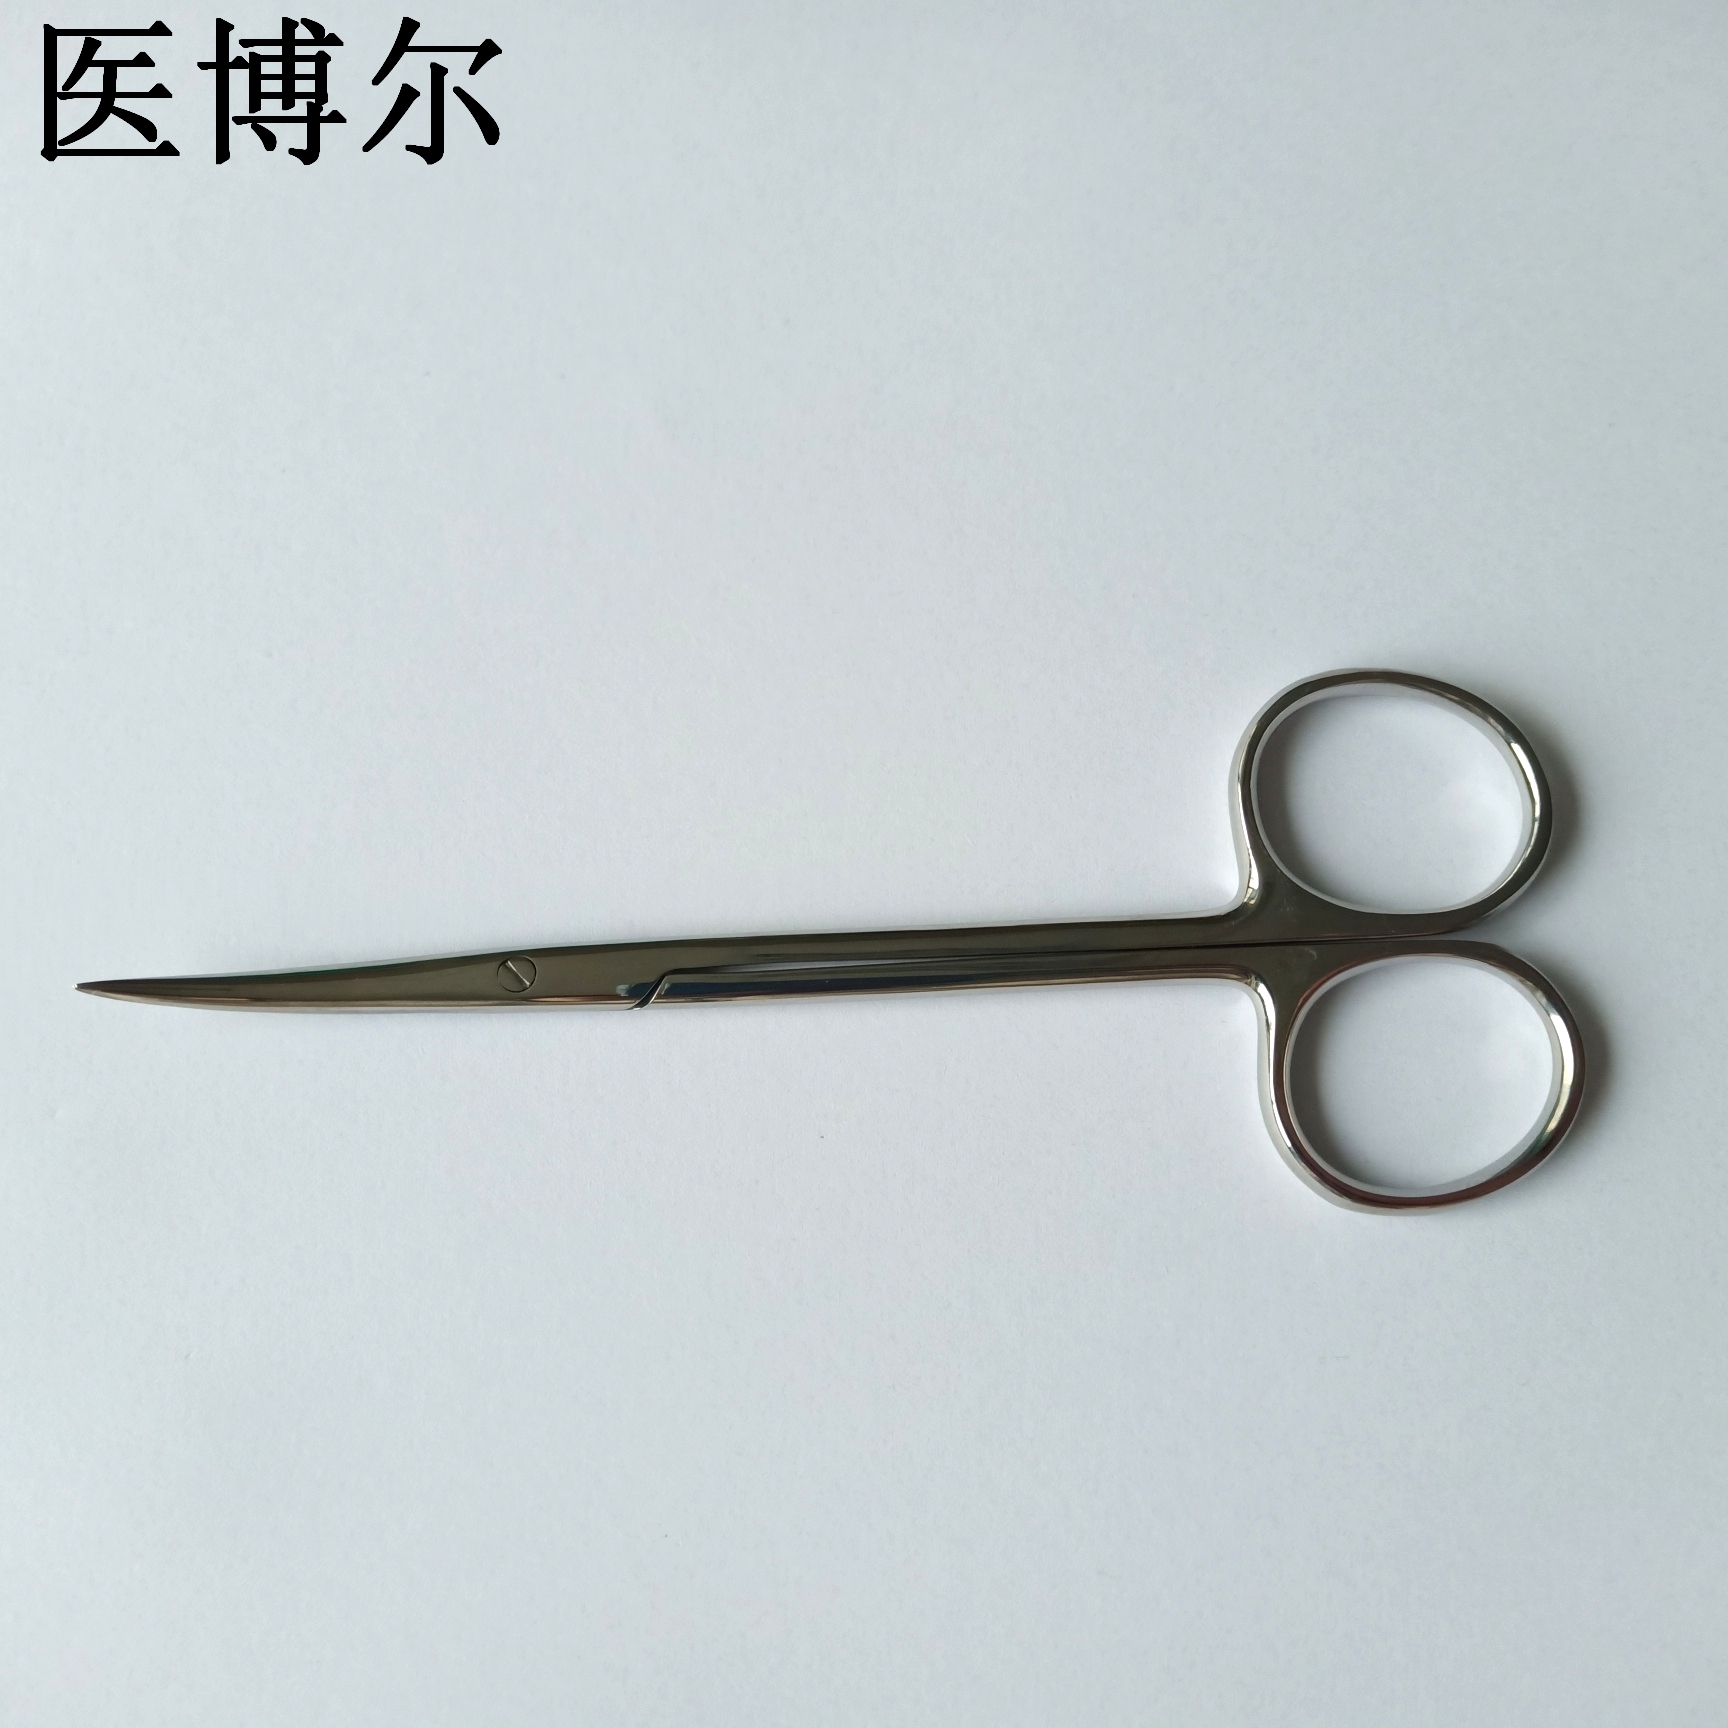 12.5cm精细弯尖剪刀 (7)_看图王.jpg